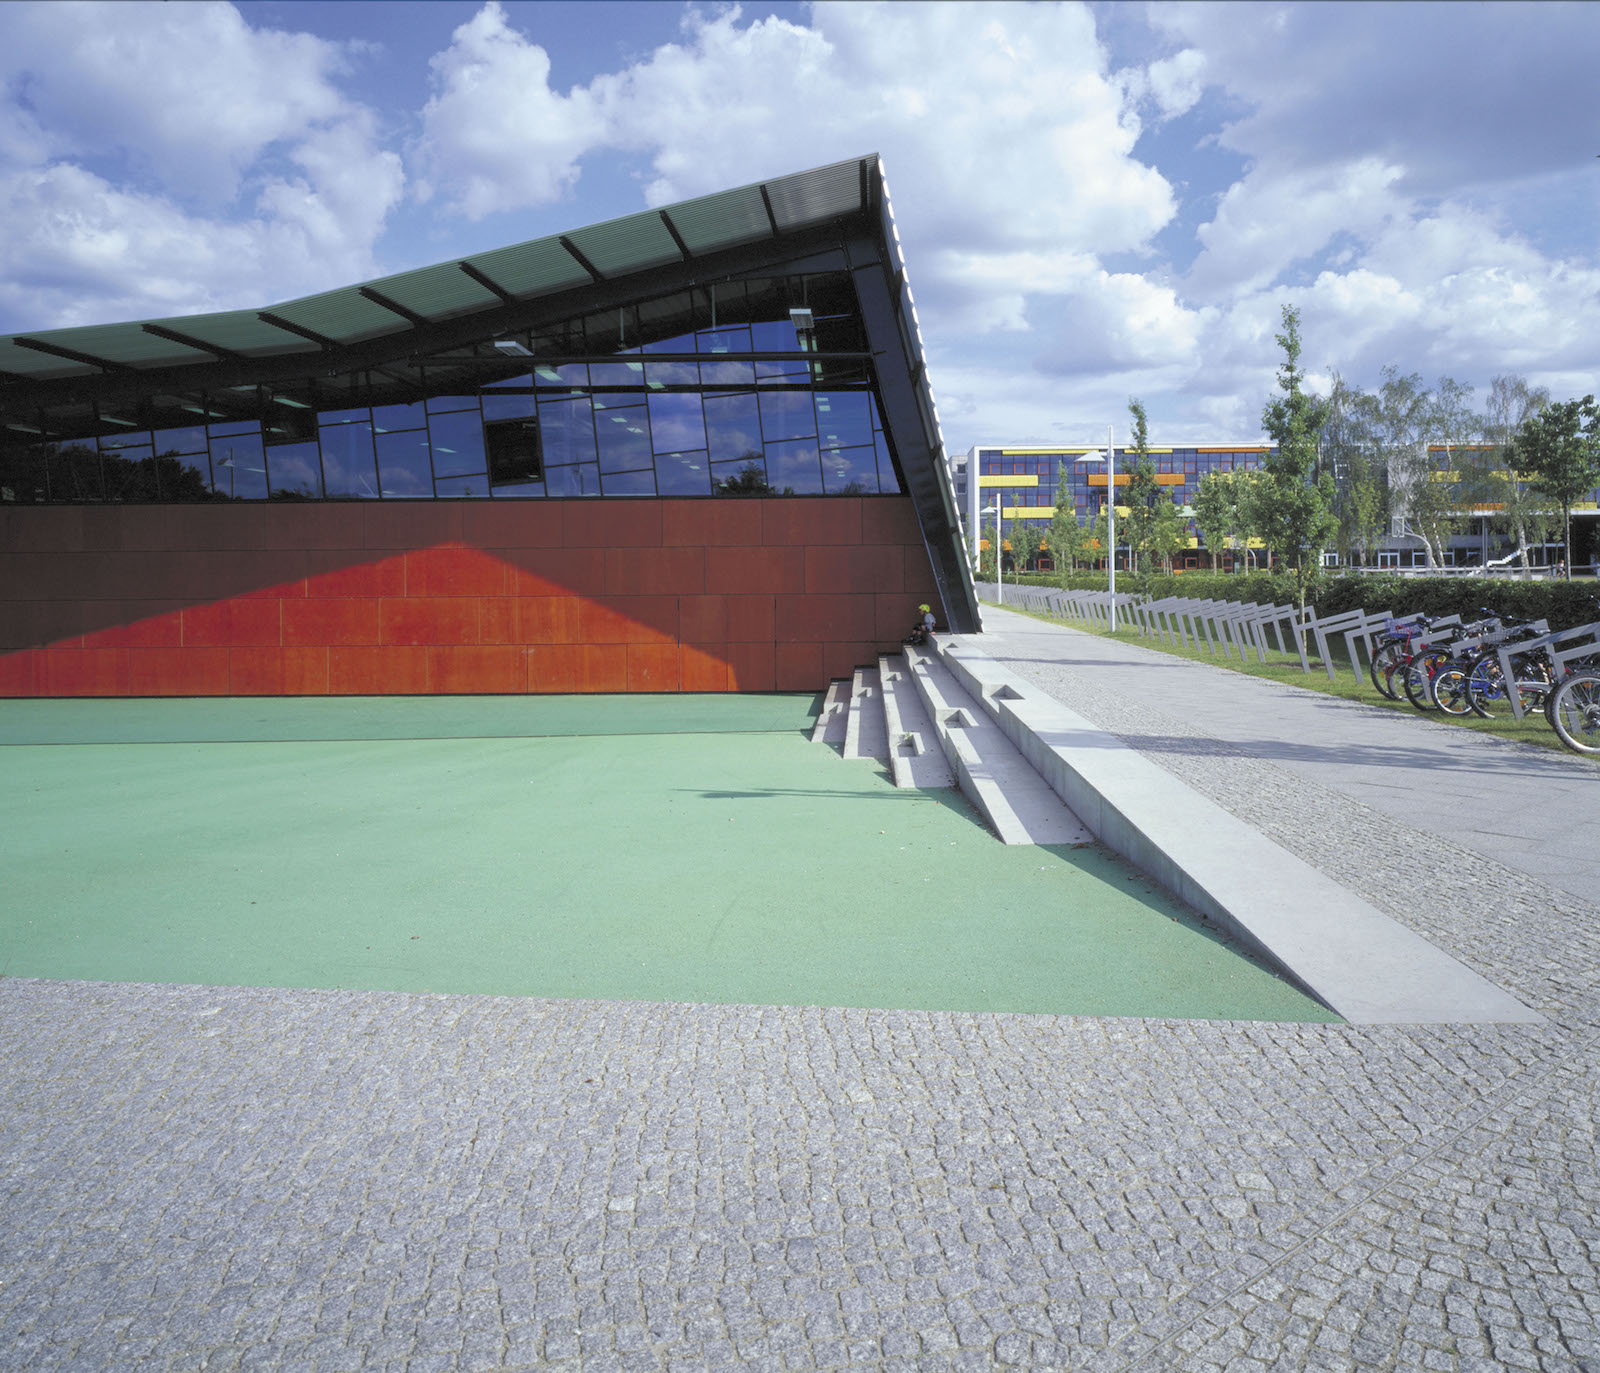 Dreifeld-Sporthalle Rudower Felder, Berlin